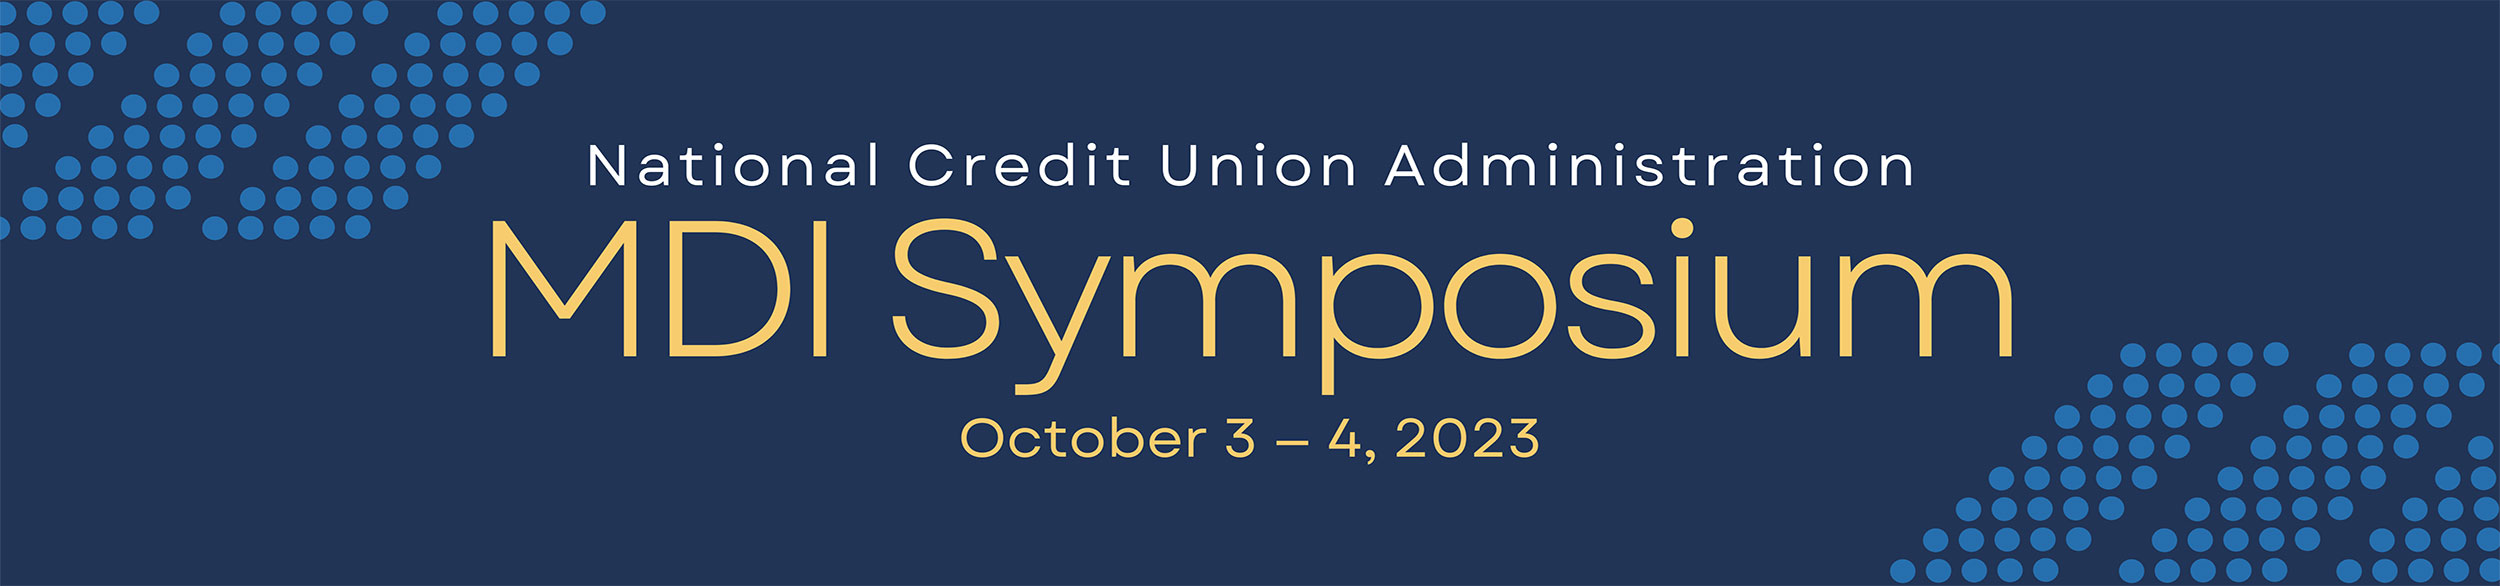 National Credit Union Administration MDI Symposium, October 3-4, 2023